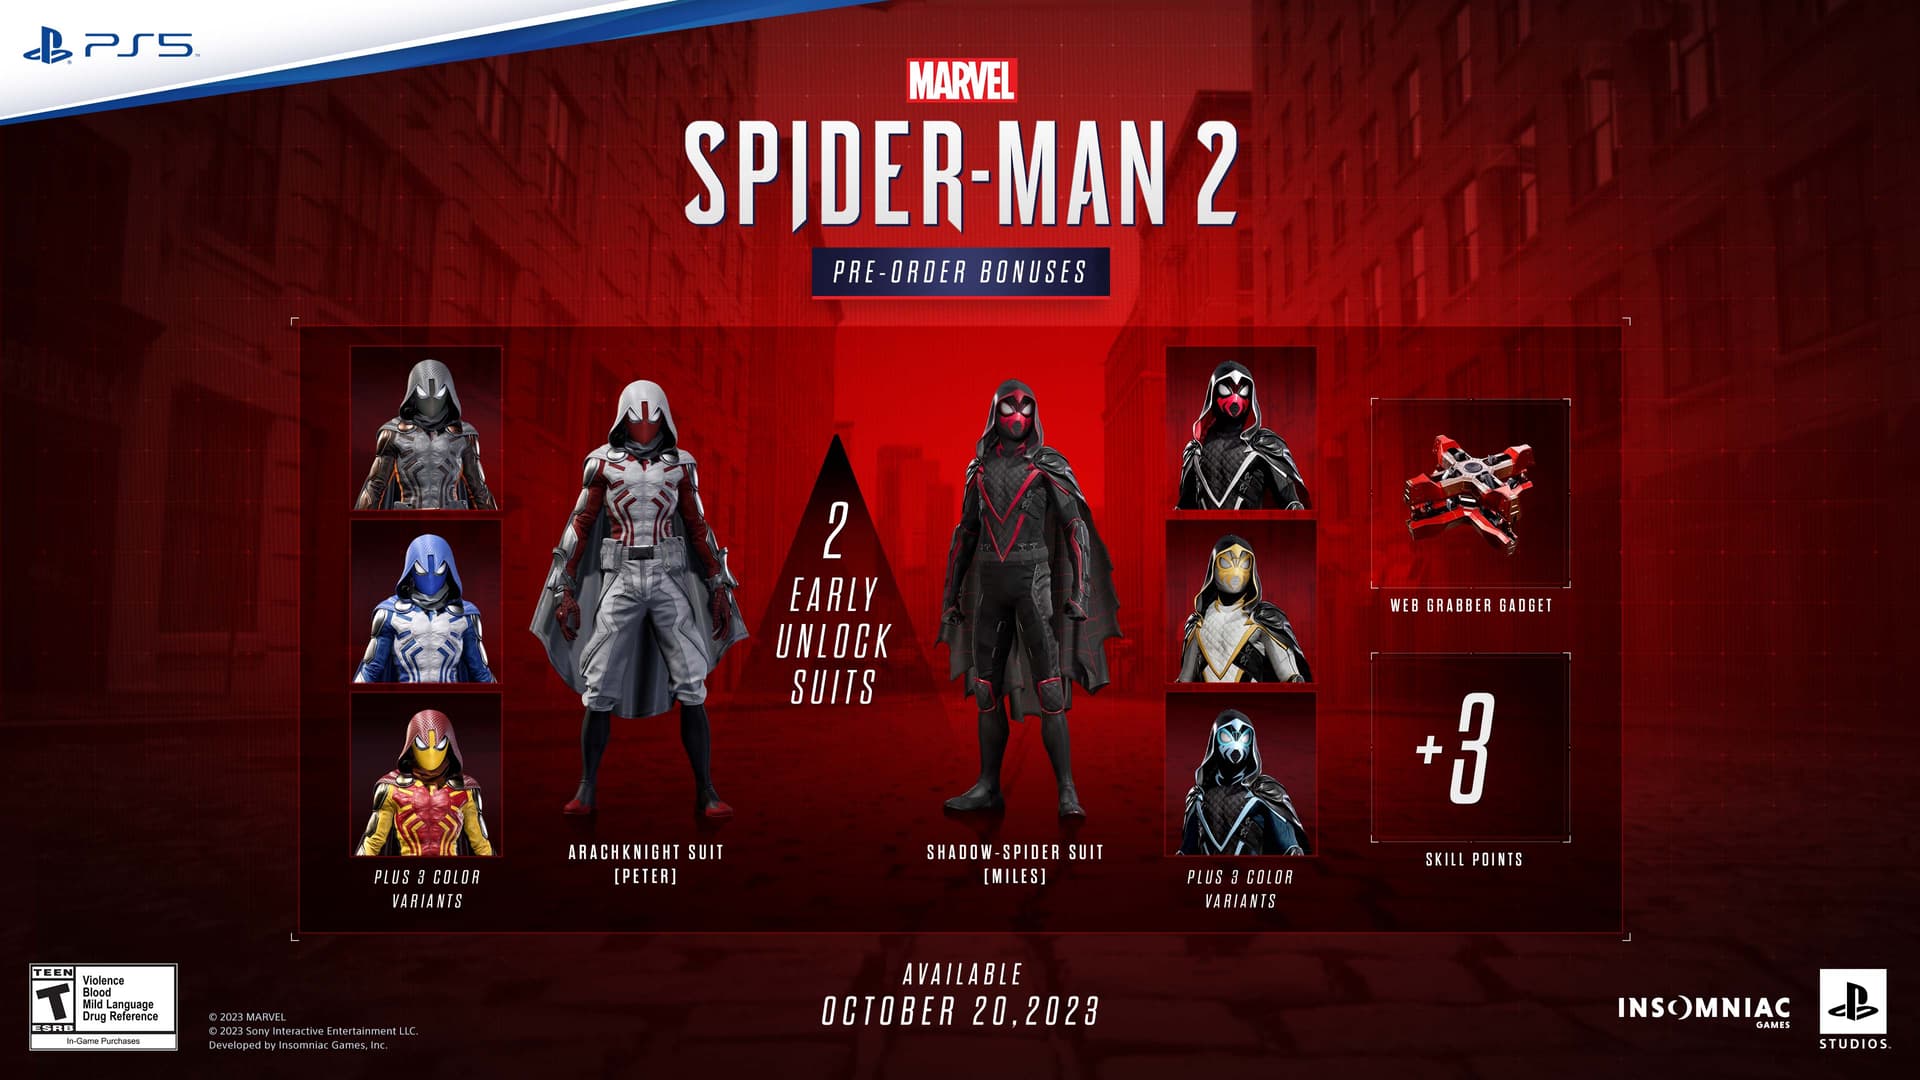 Pre-Order bonuses for Spider-Man 2